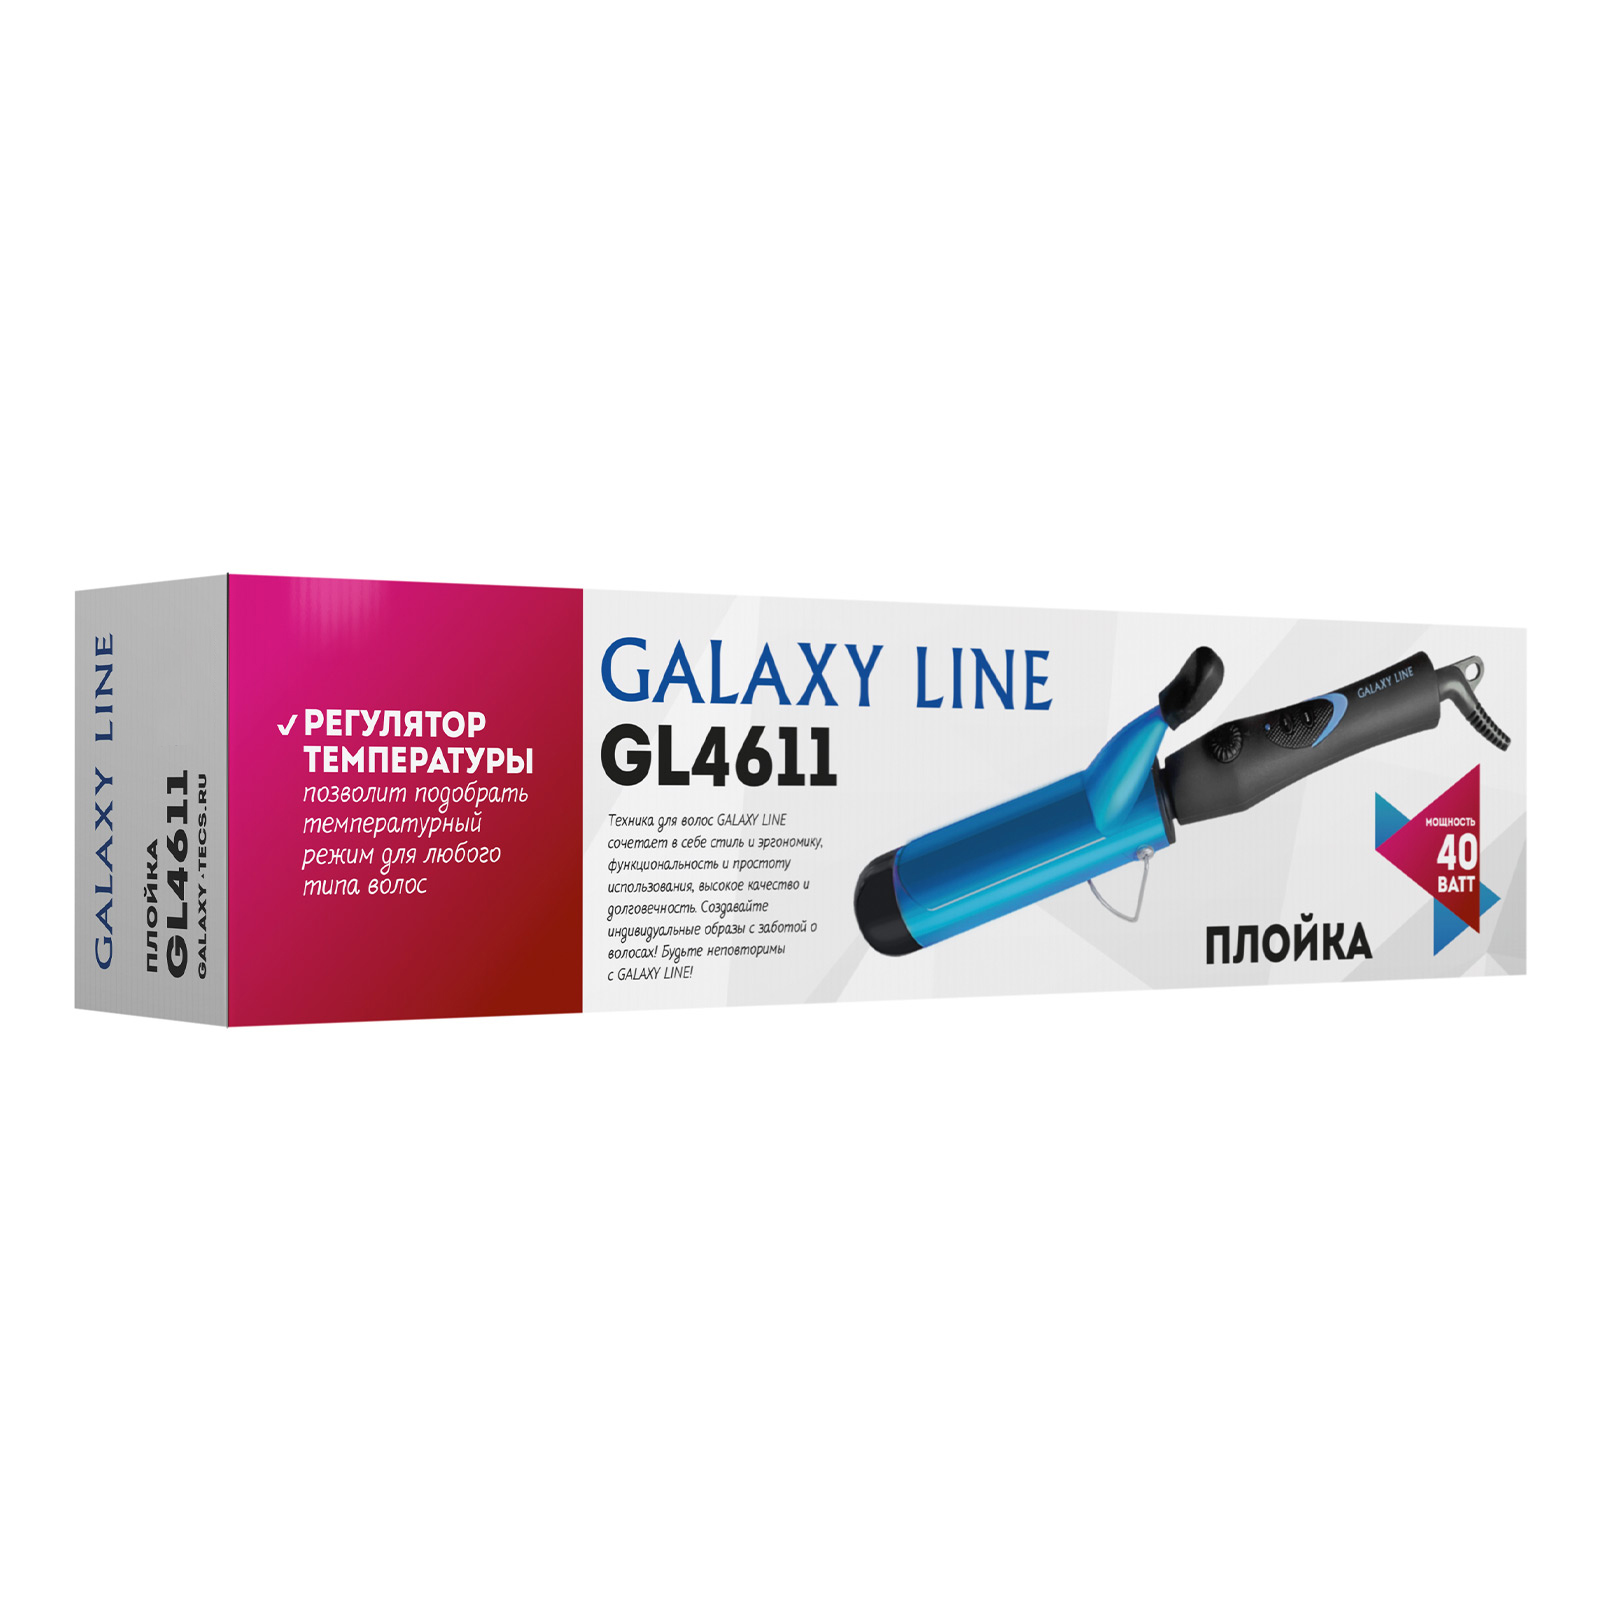 Плойка 40 Вт Galaxy Line Galaxy Line DMH-ГЛ4611Л - фото 8